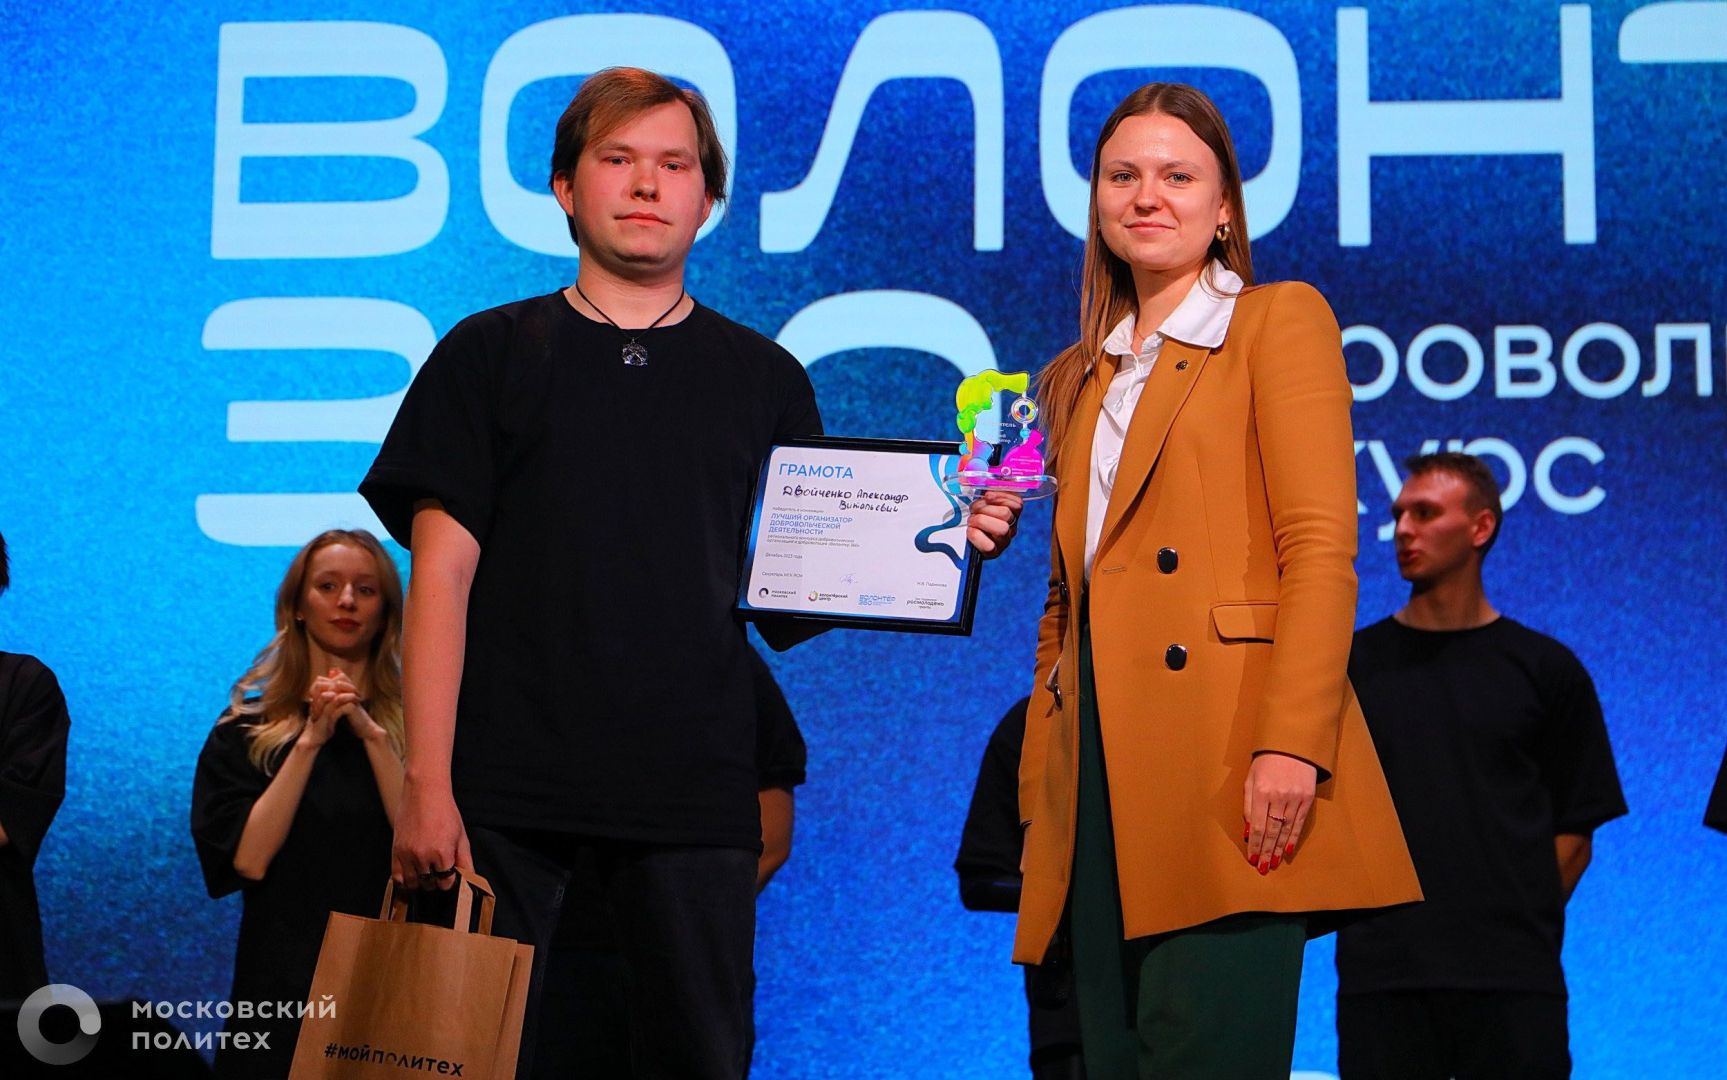 Маёвец стал победителем конкурса «Волонтёр 360»